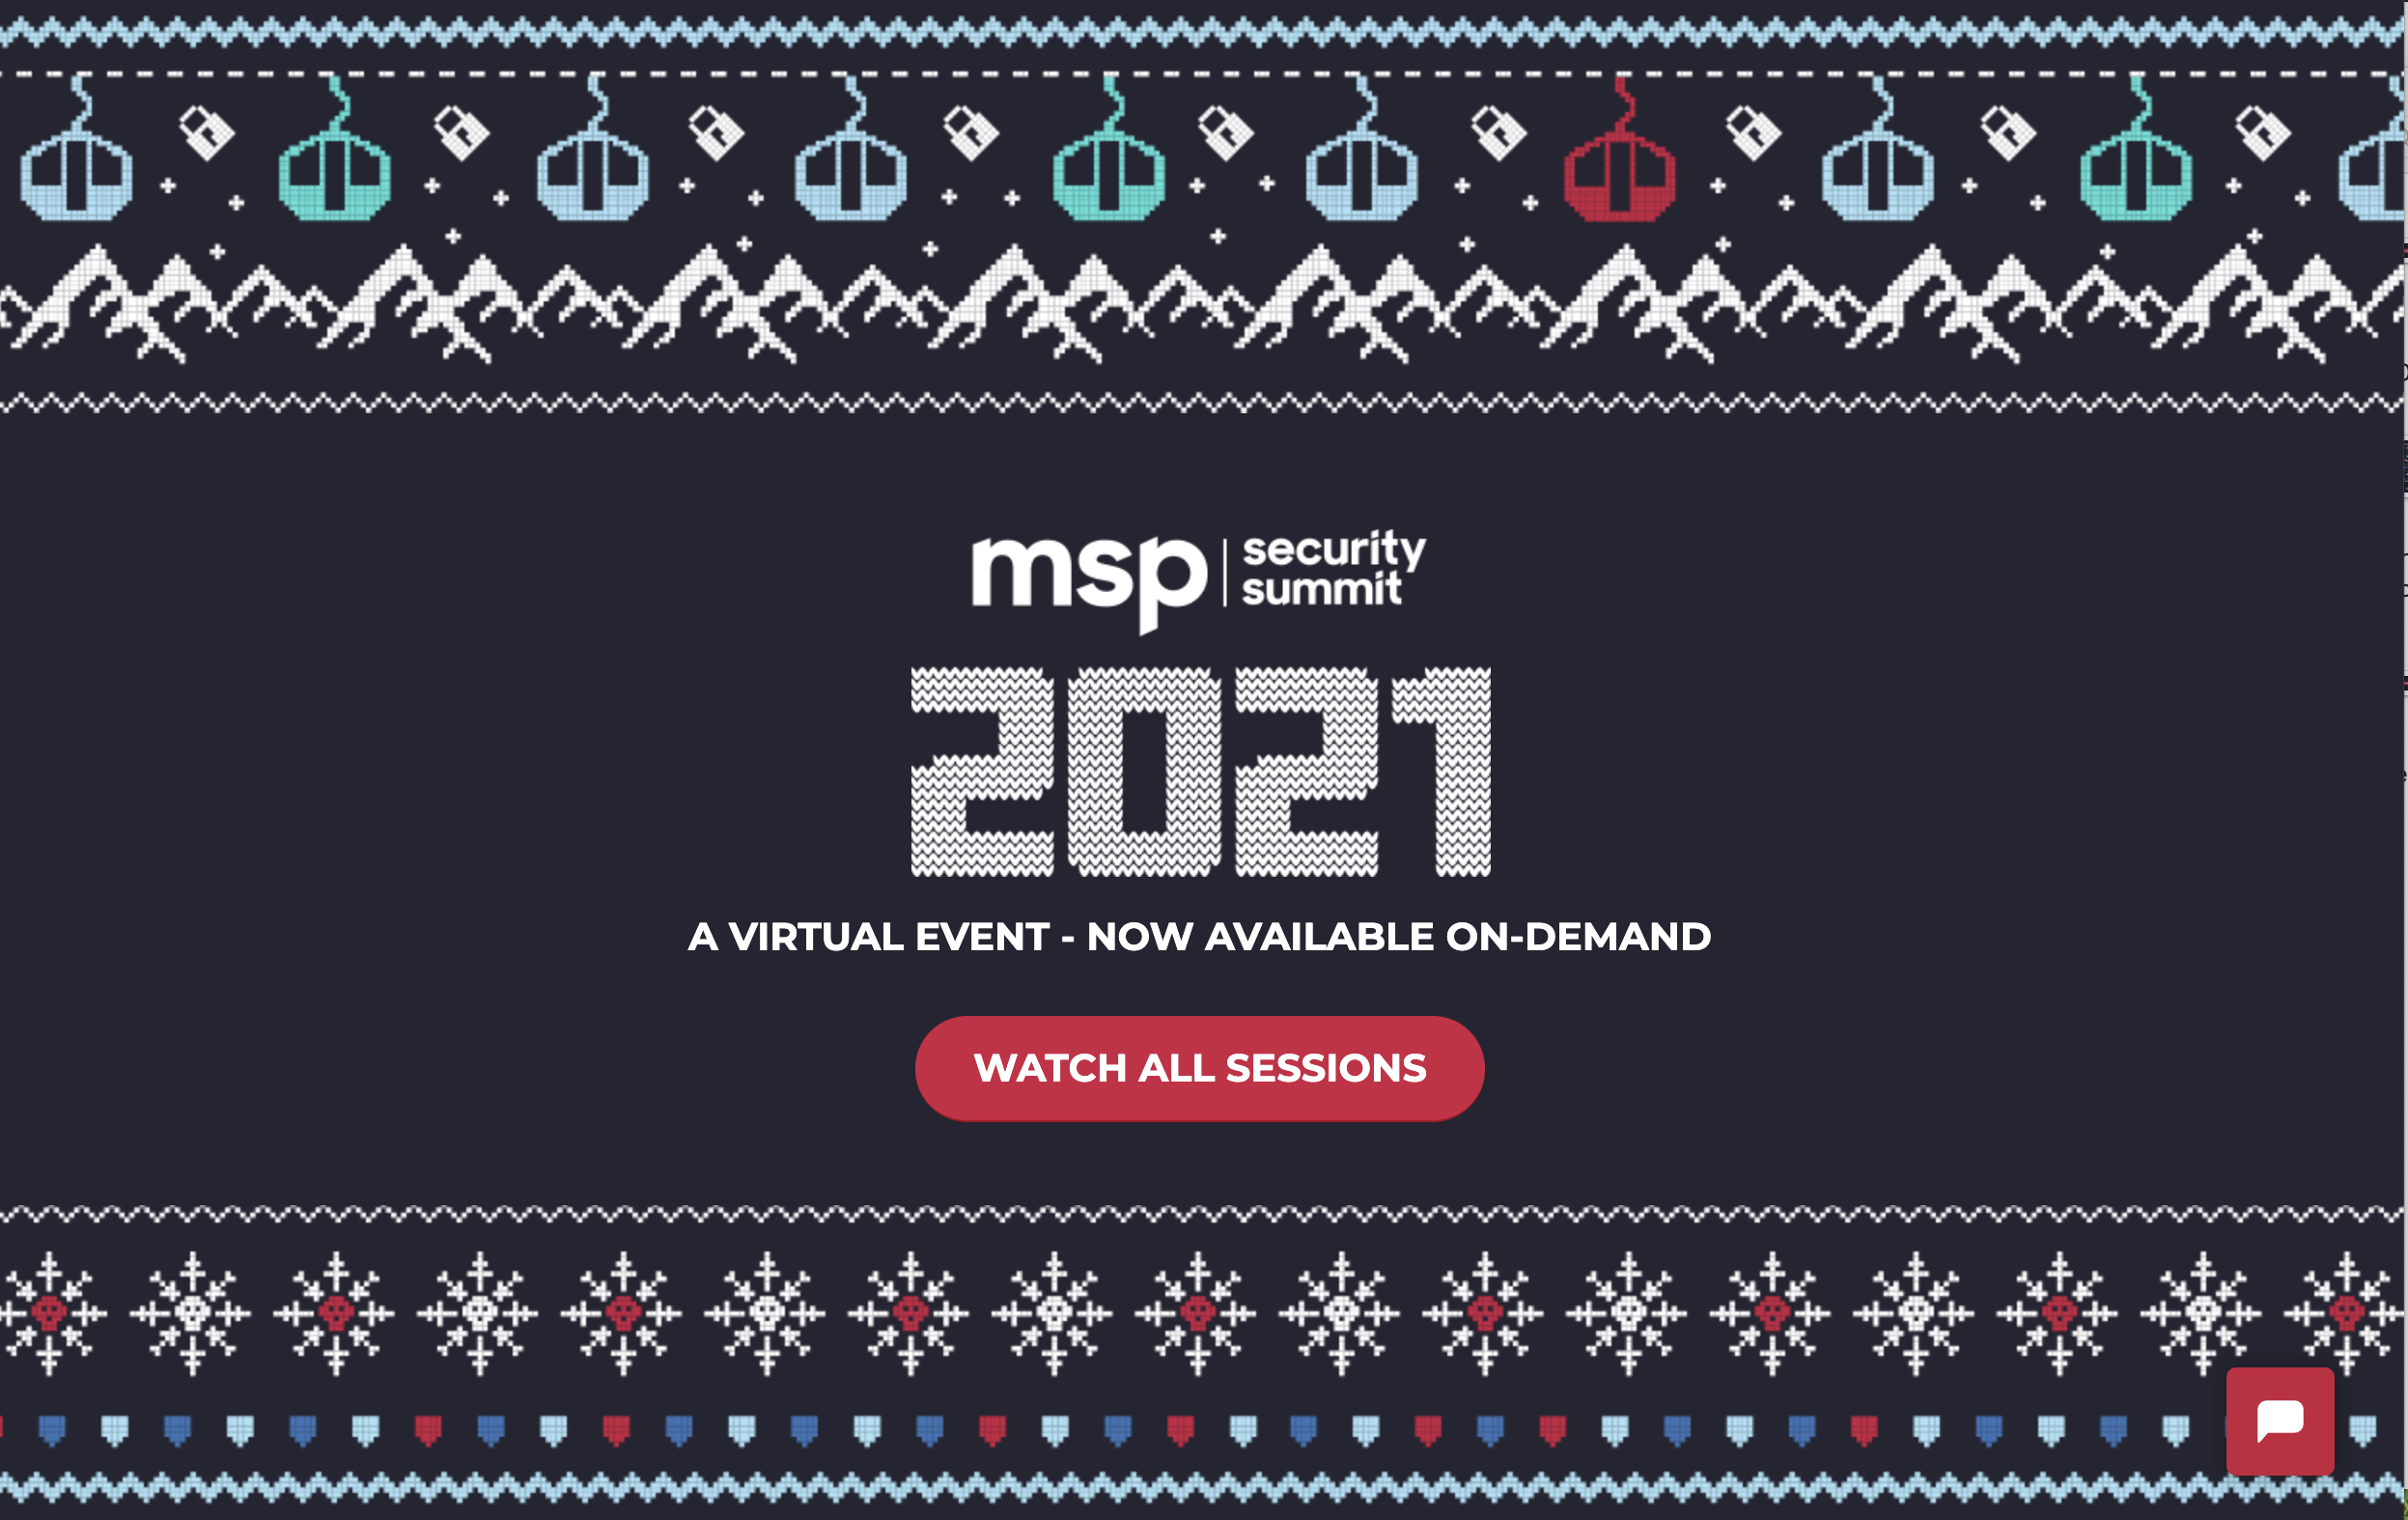 MSP Security Summit 2021 on-demand